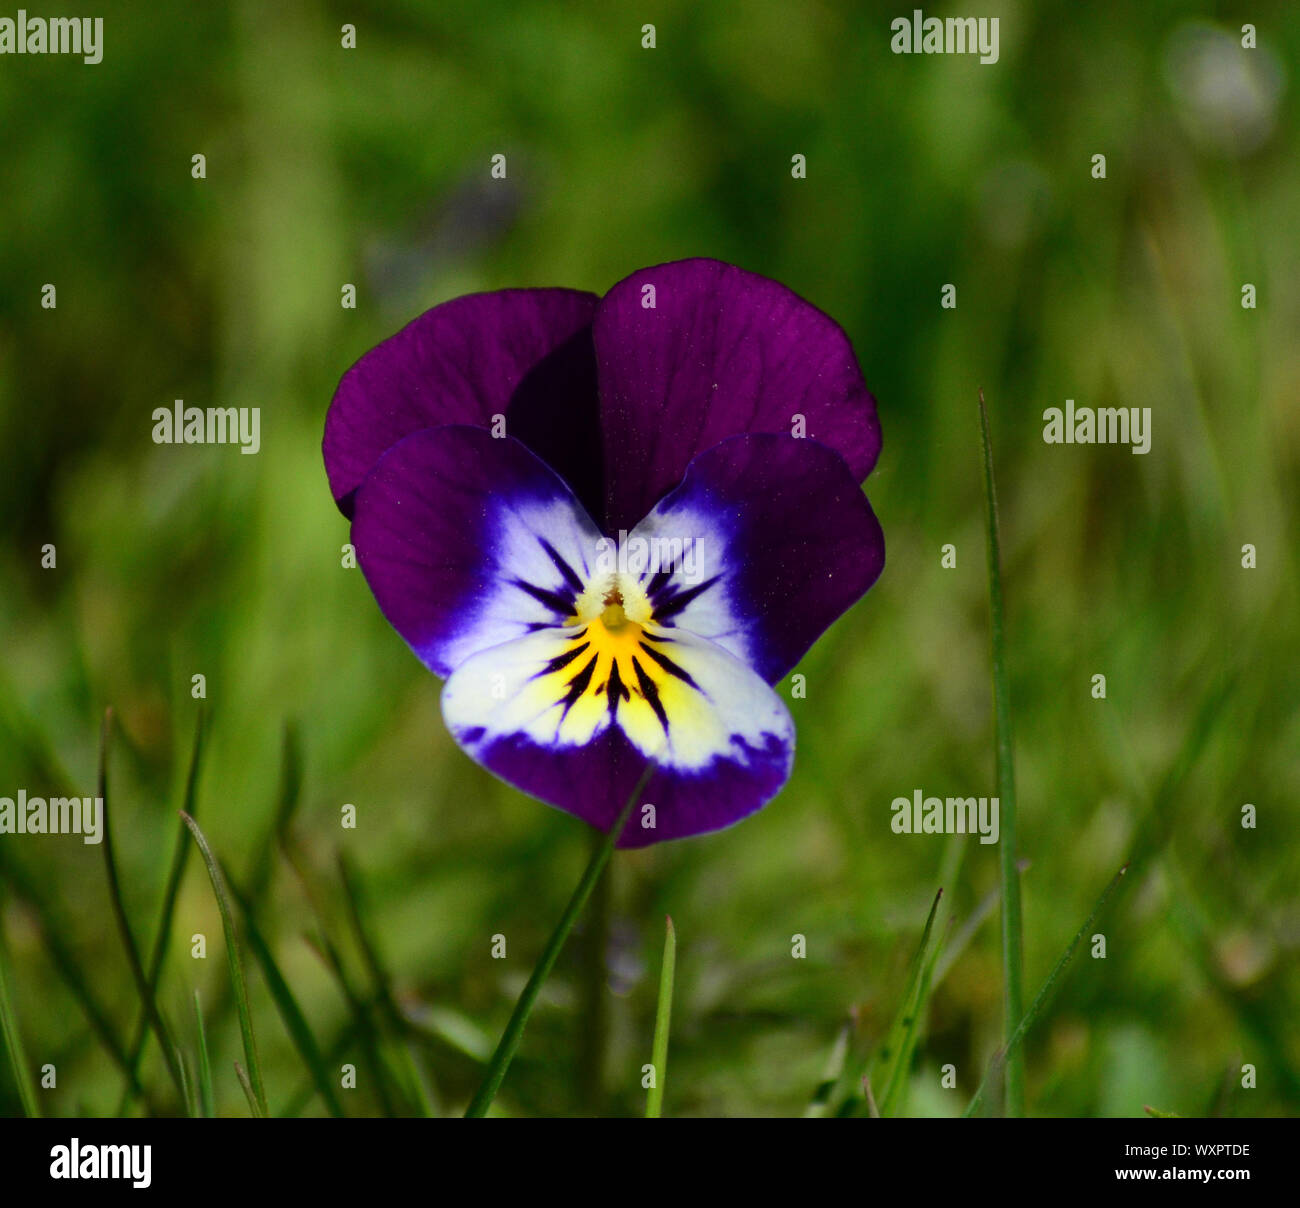 Purple White Blue And Yellow Pansy Flower Uk Stock Photo Alamy